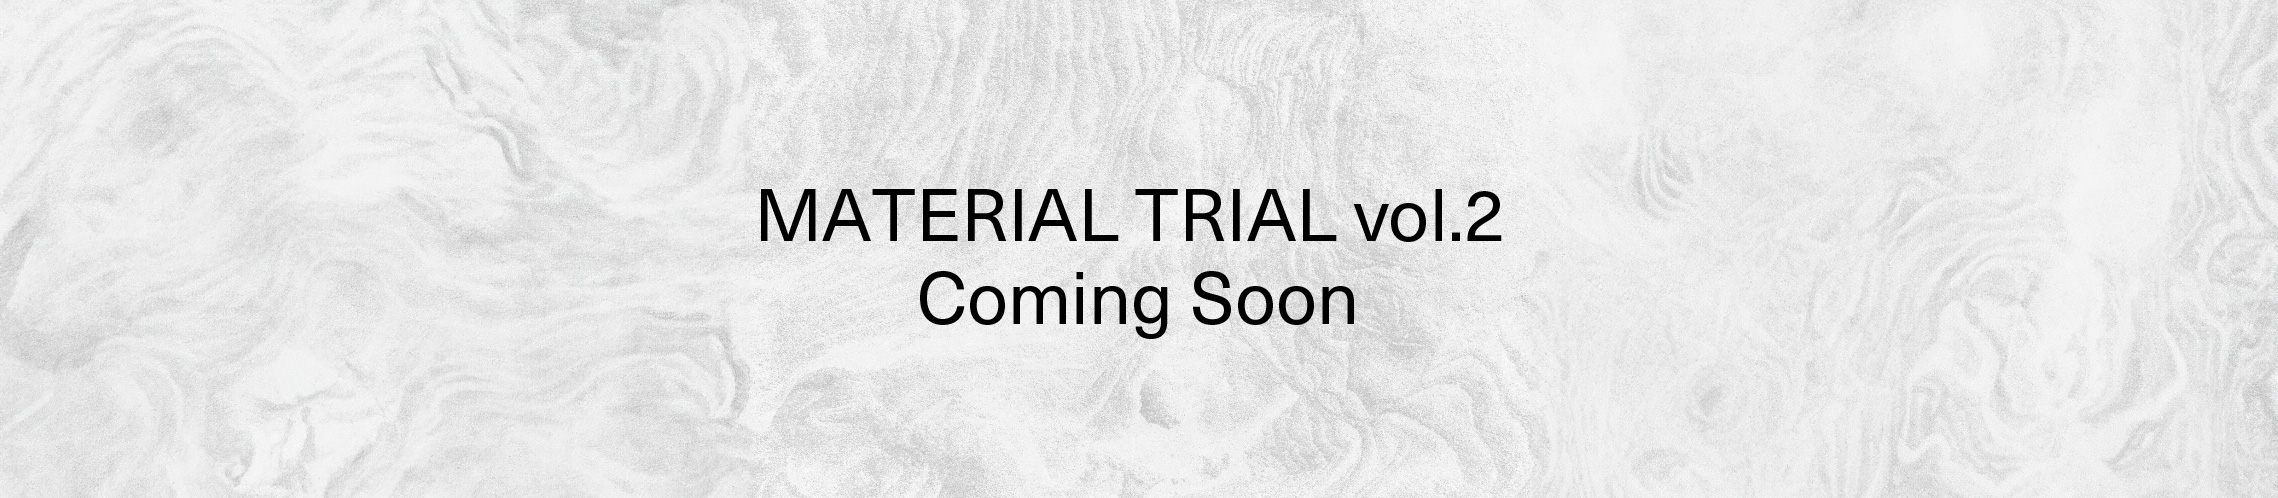 MATERIAL TRIAL vol.2 Coming Soon